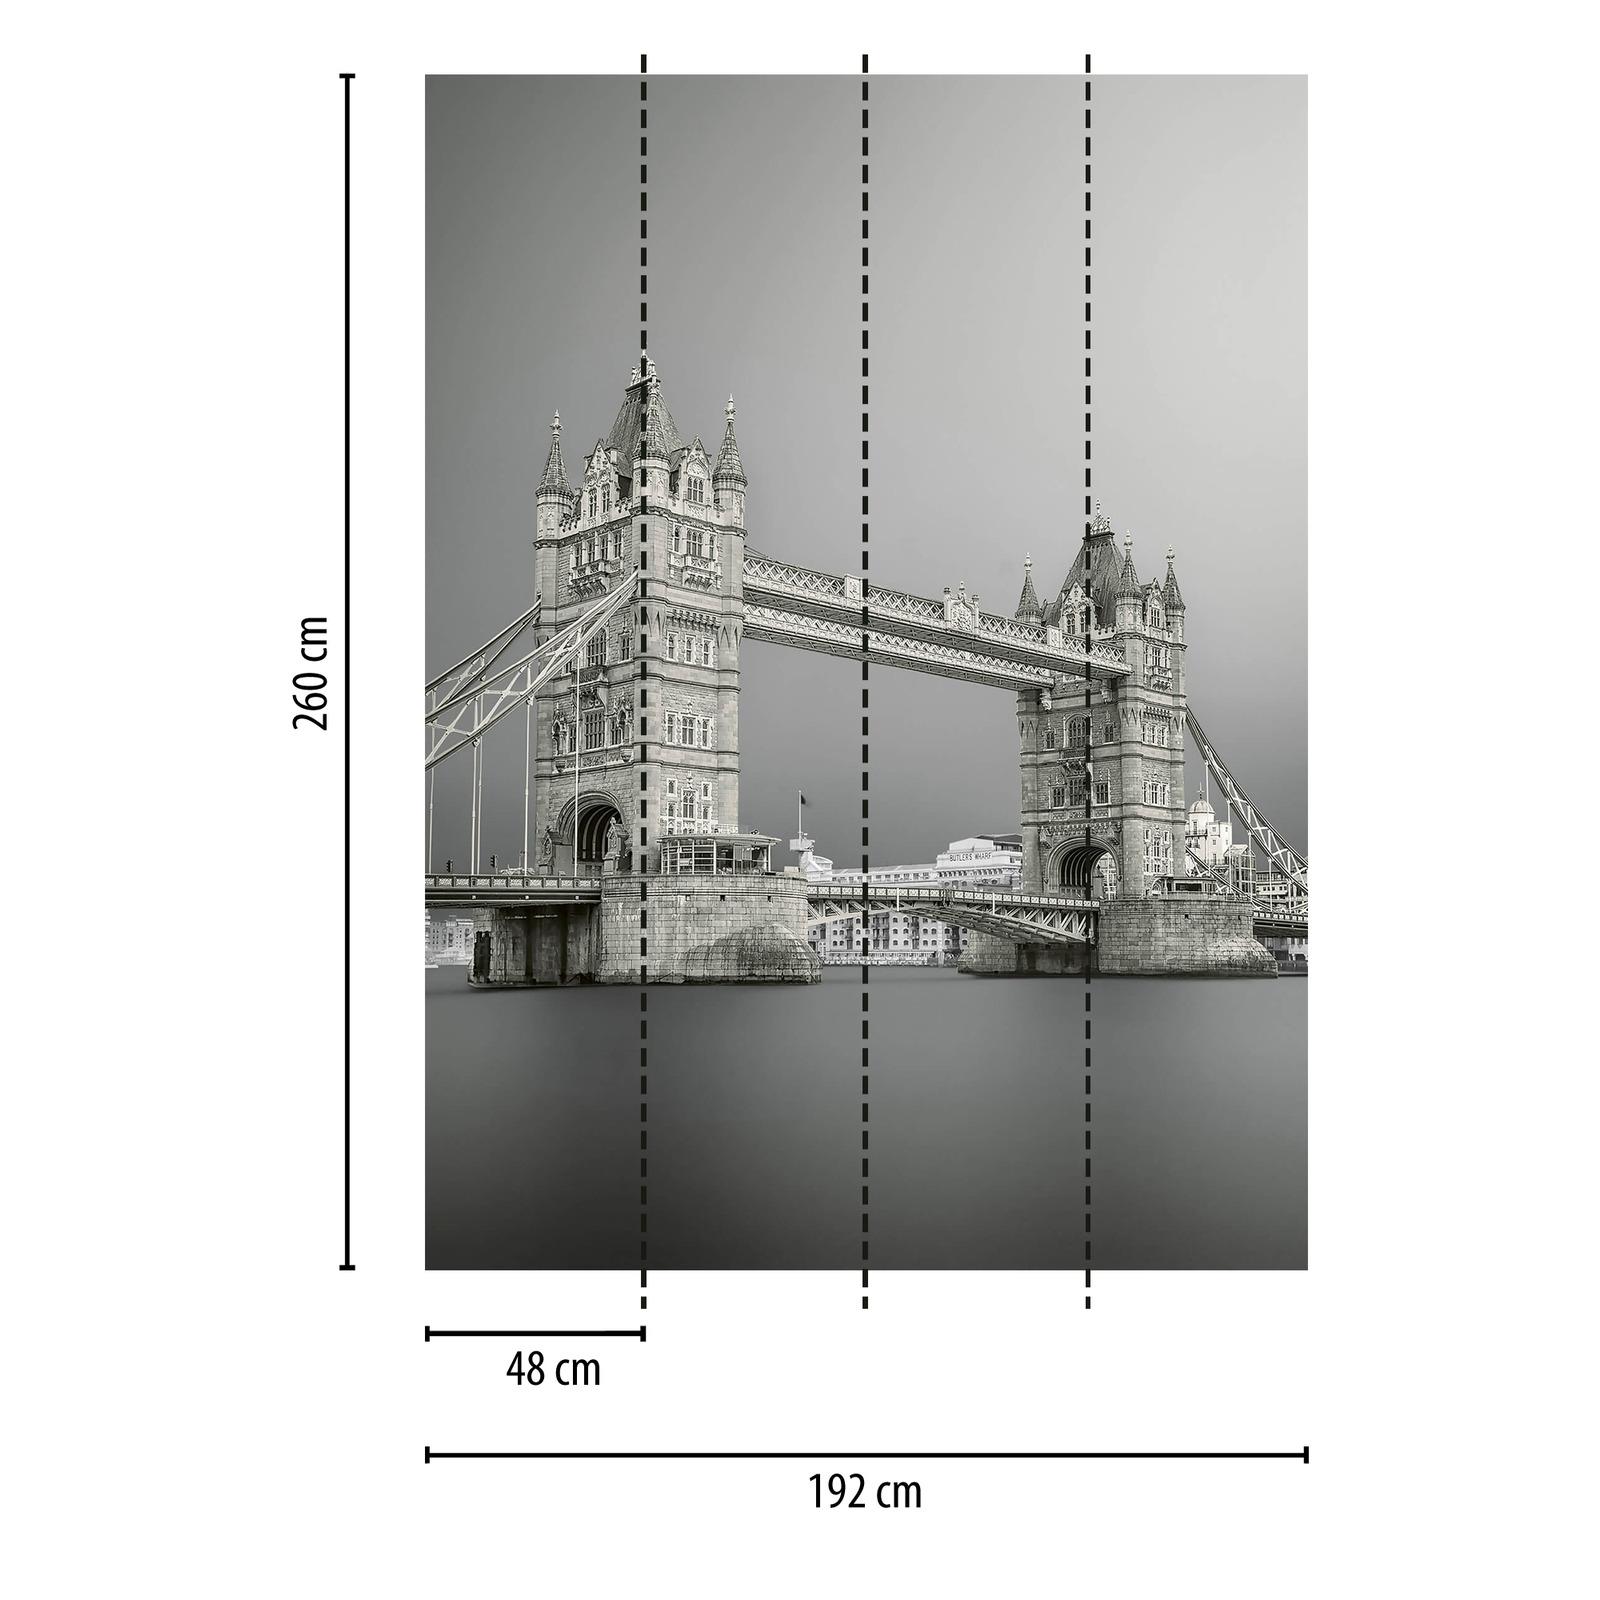             Fototapete London Tower Bridge – Grau, Weiß, Schwarz
        